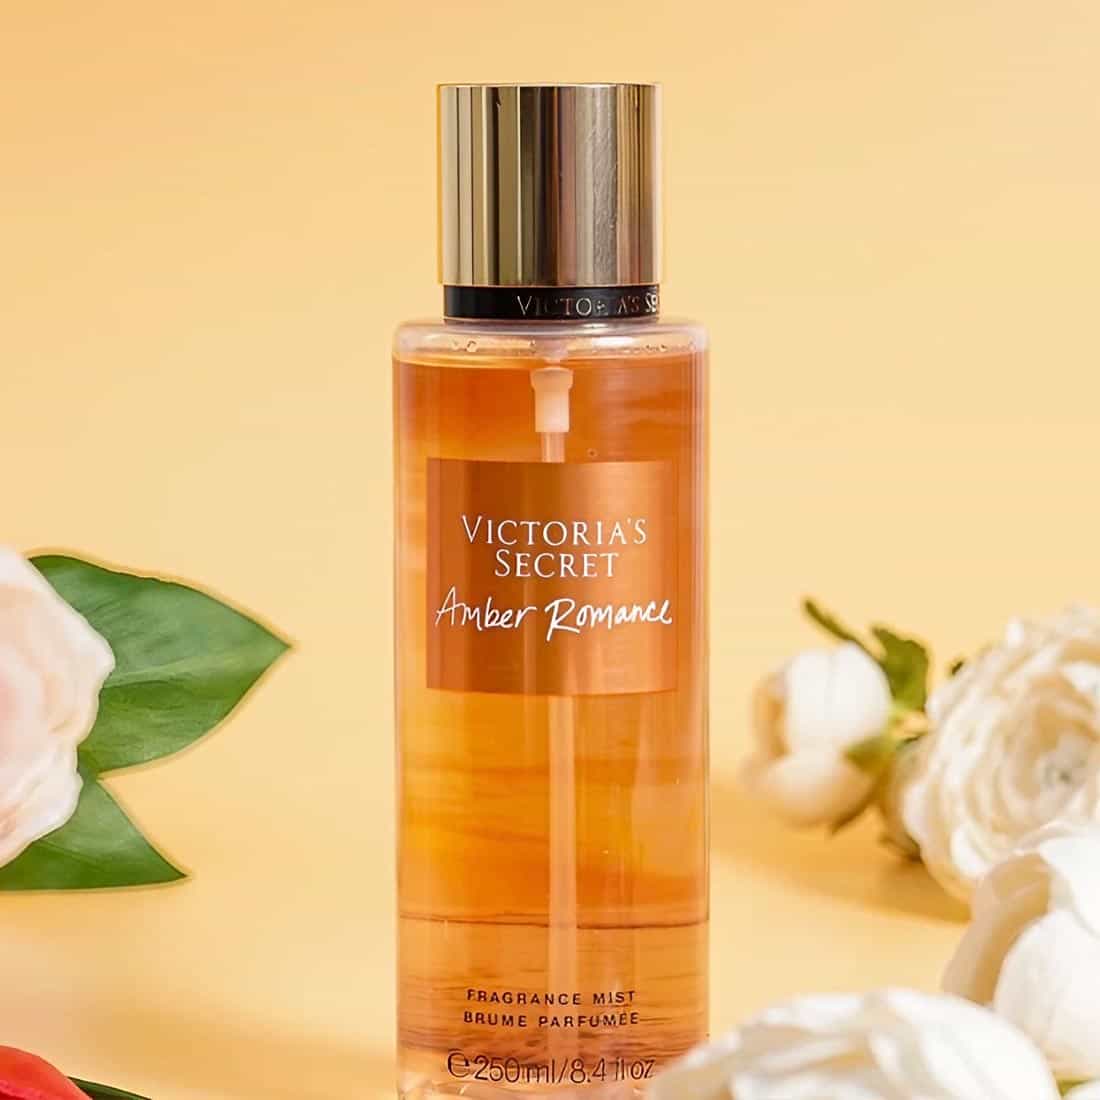 Victoria's Secret Amber Romance Fragrance Mist | My Perfume Shop Australia